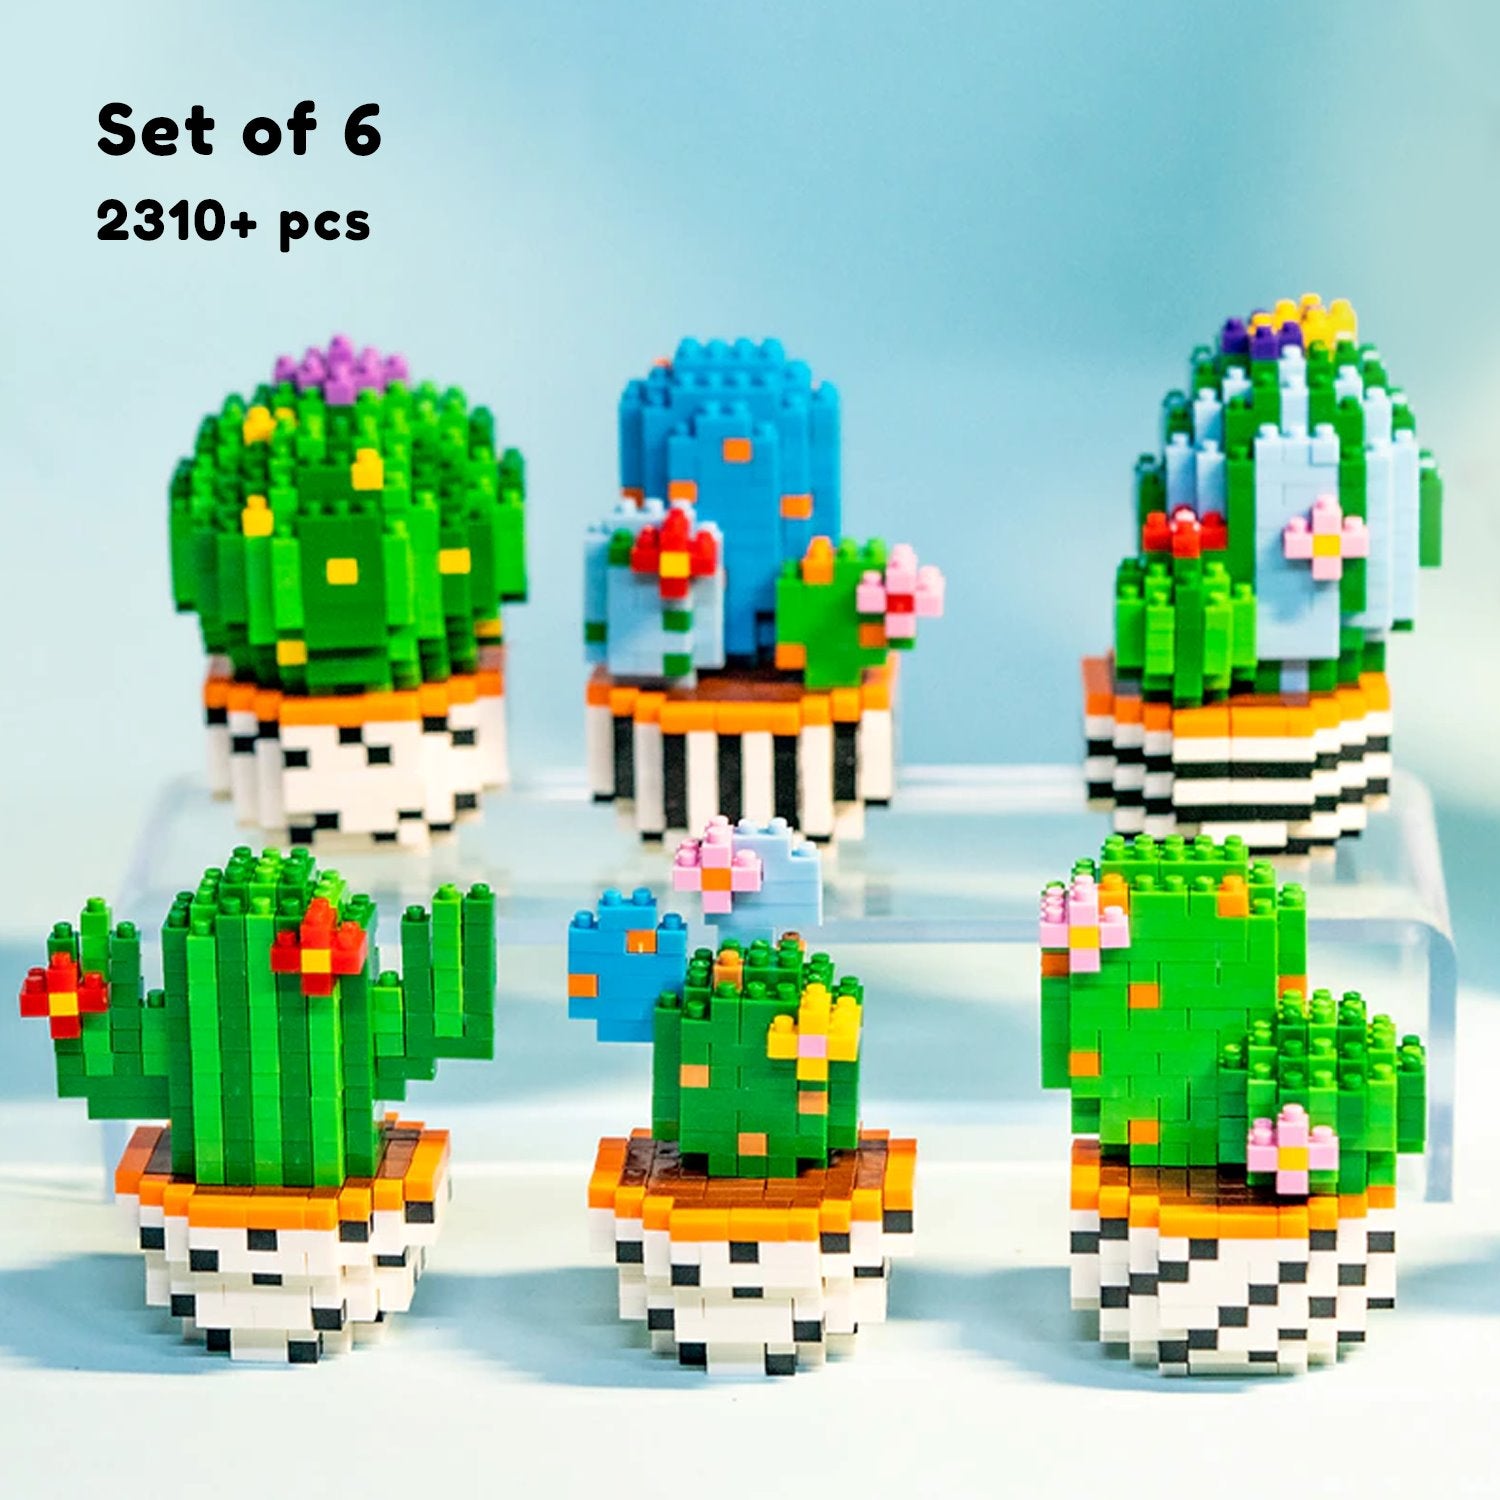 Cuddly Cactus - Small / Grow Pot / Plastic